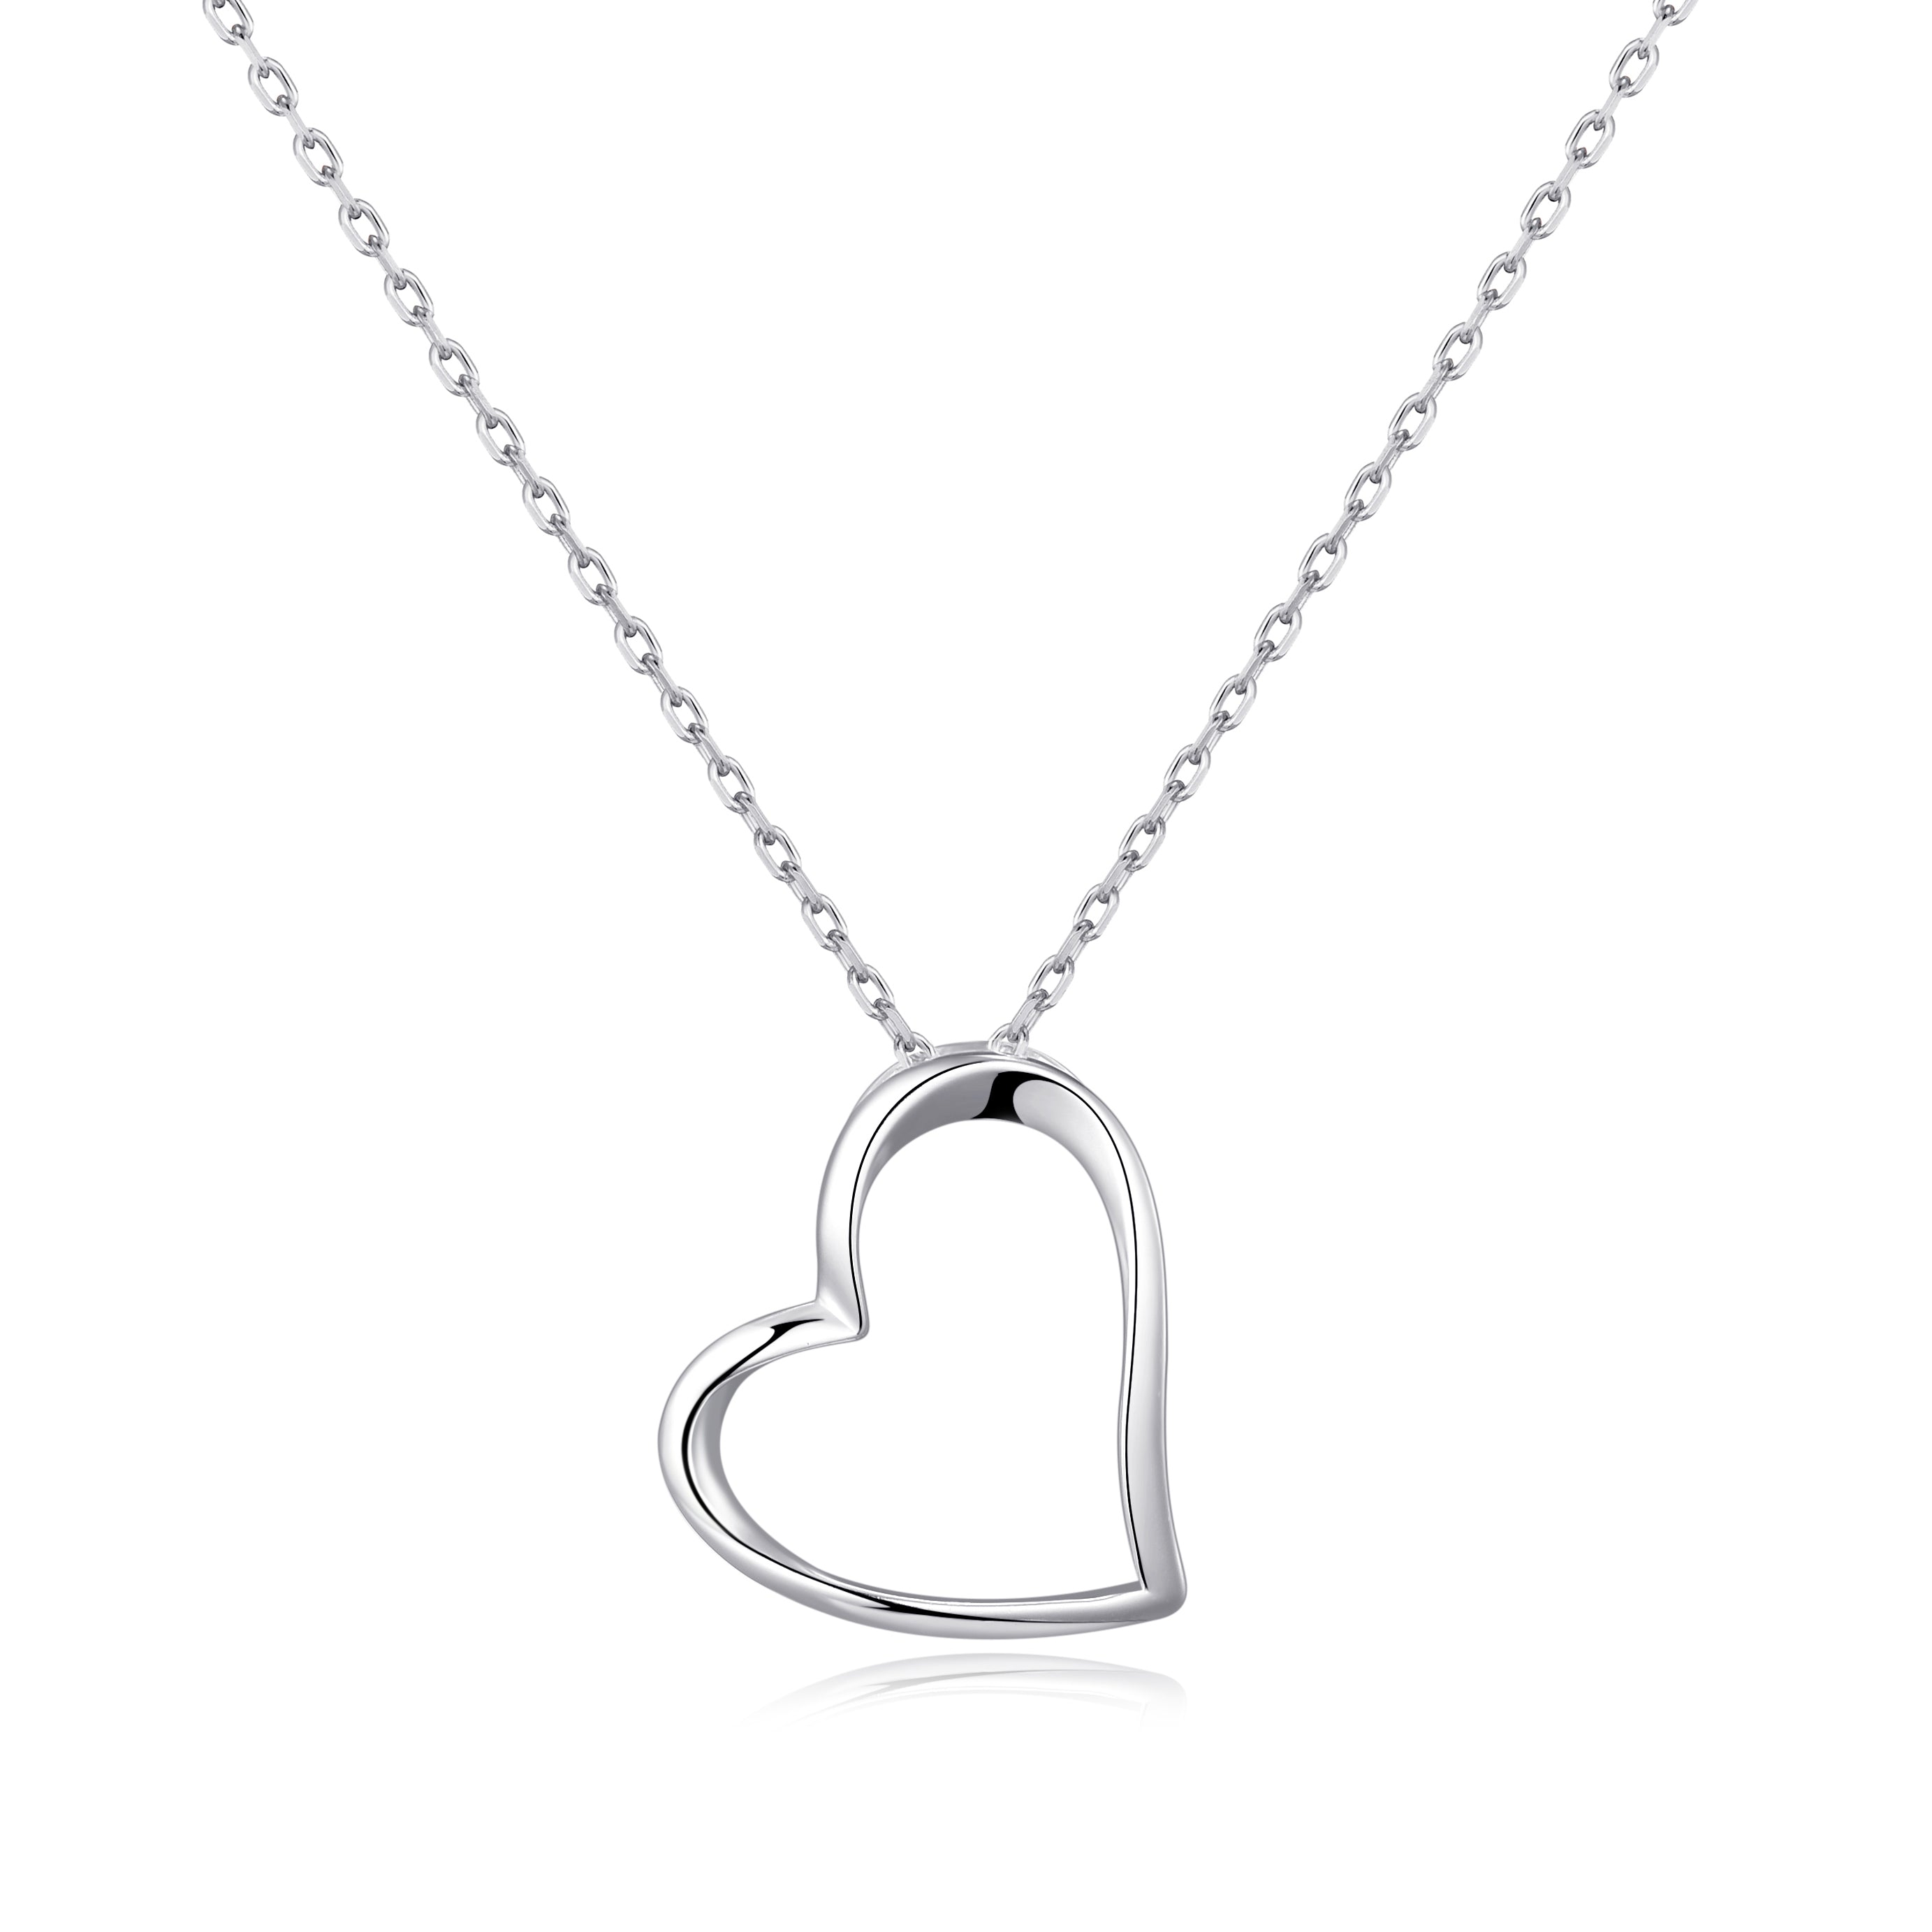 Sterling Silver Heart Pendant Necklace by Philip Jones Jewellery